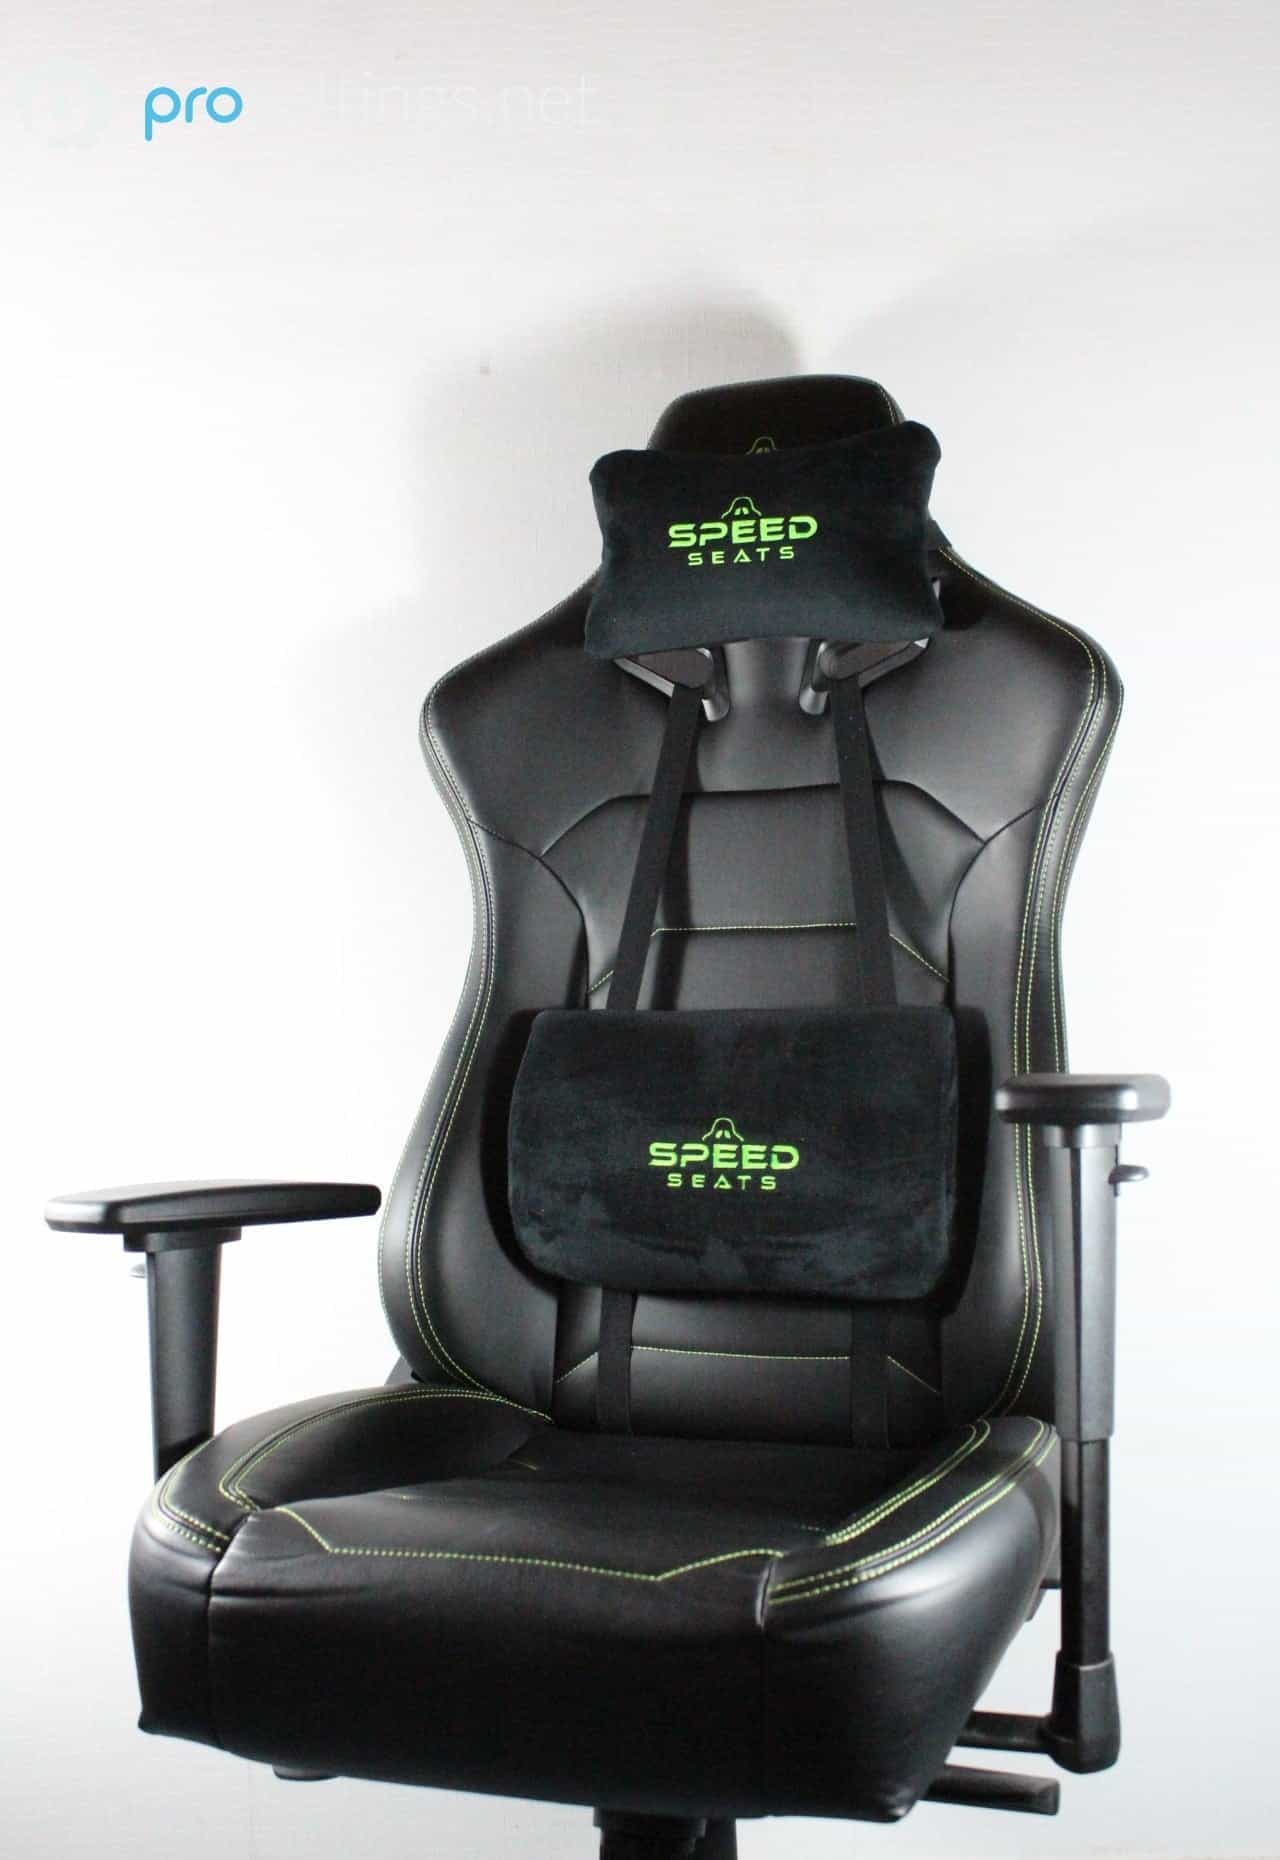 Speedseats Comfort Review Chair Overview